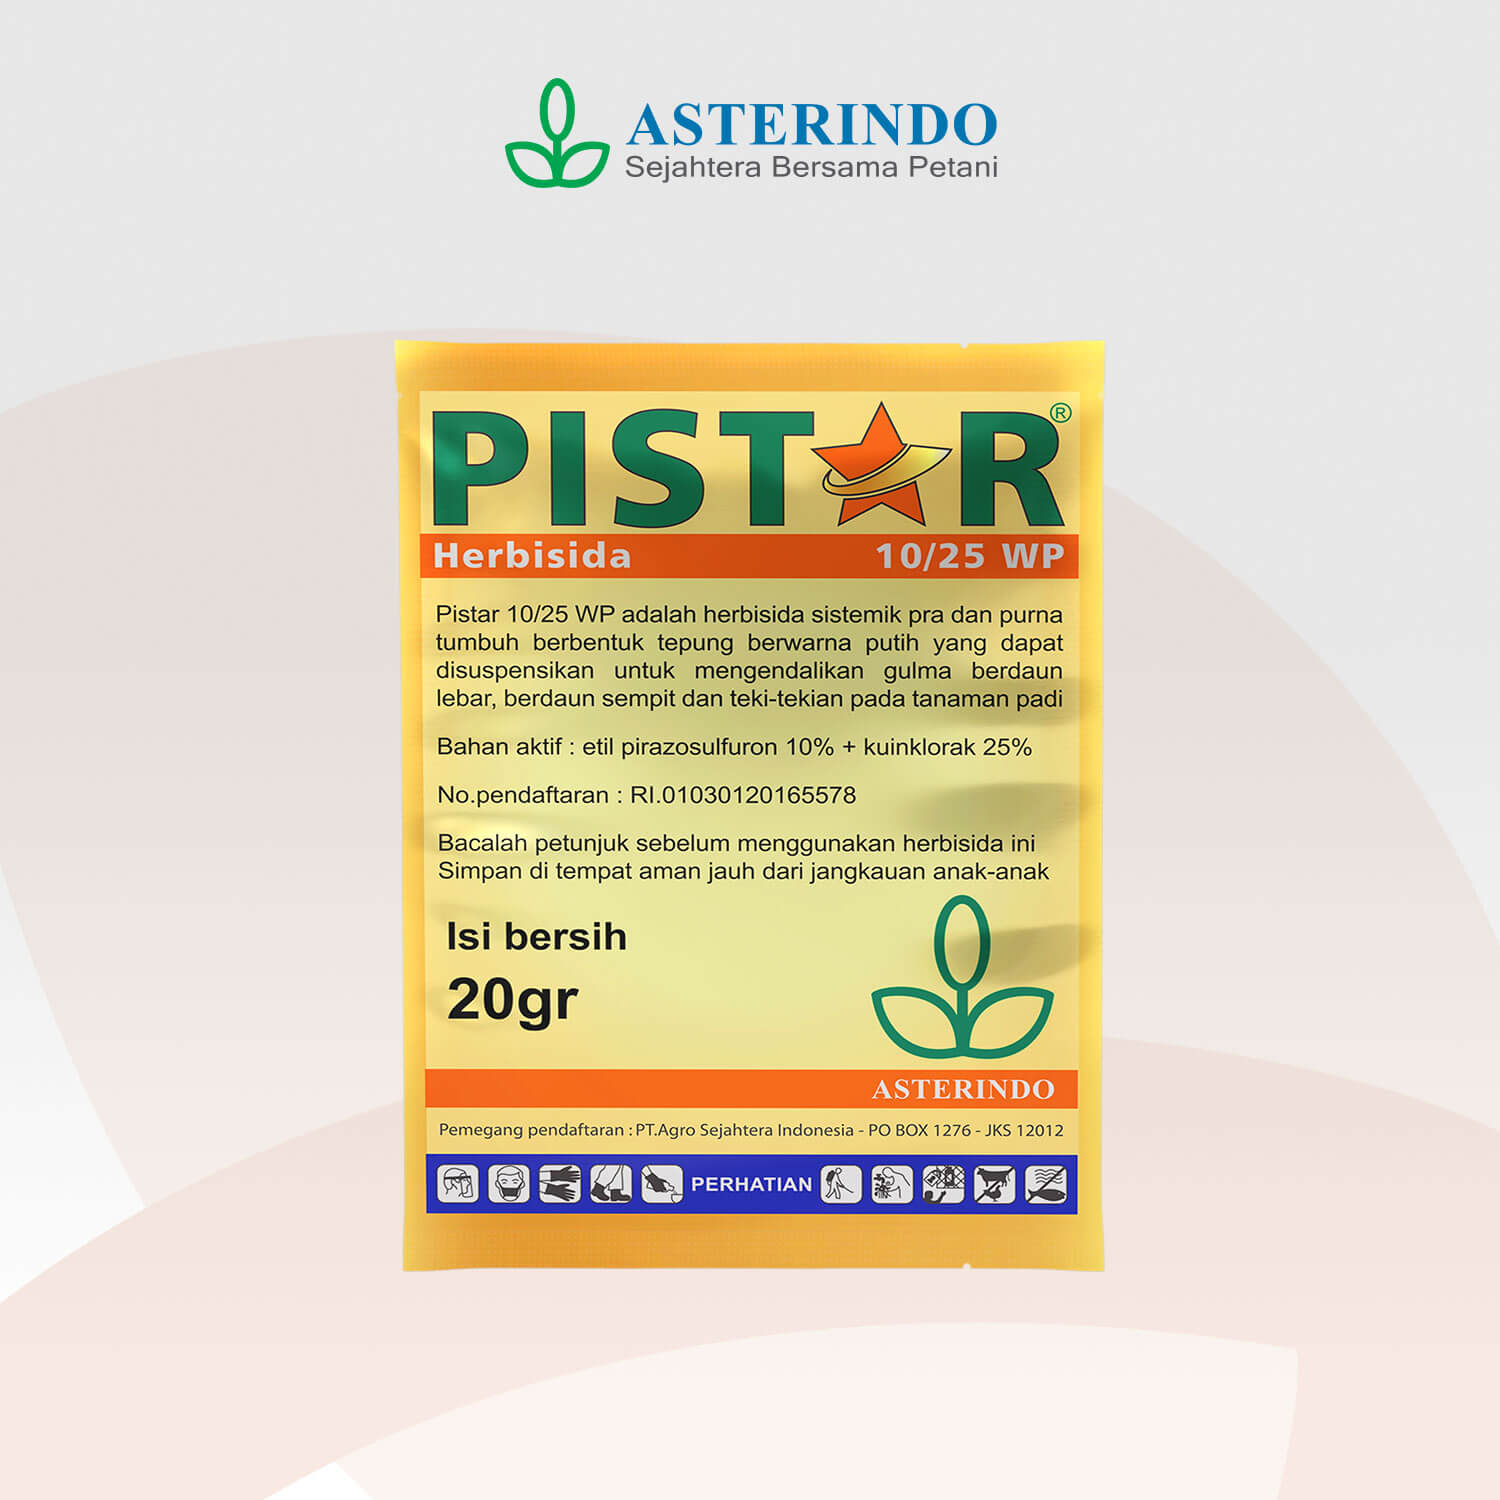 PISTAR-herbisida-Asterindo